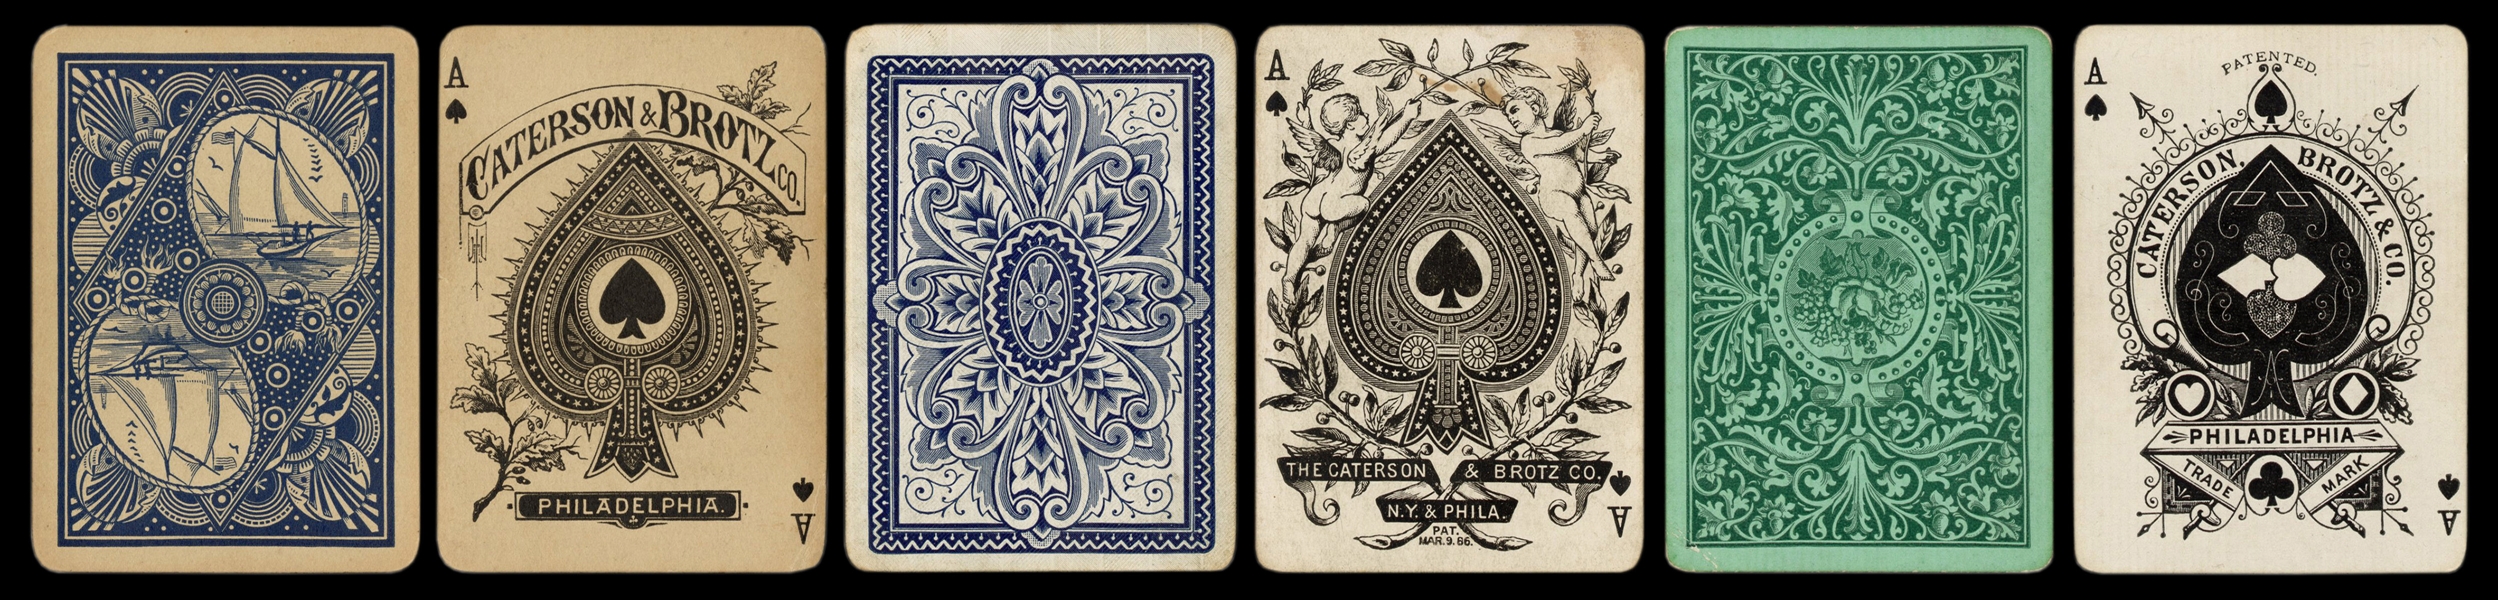  Three Caterson & Brotz Playing Card Packs. Philadelphia: Ca...